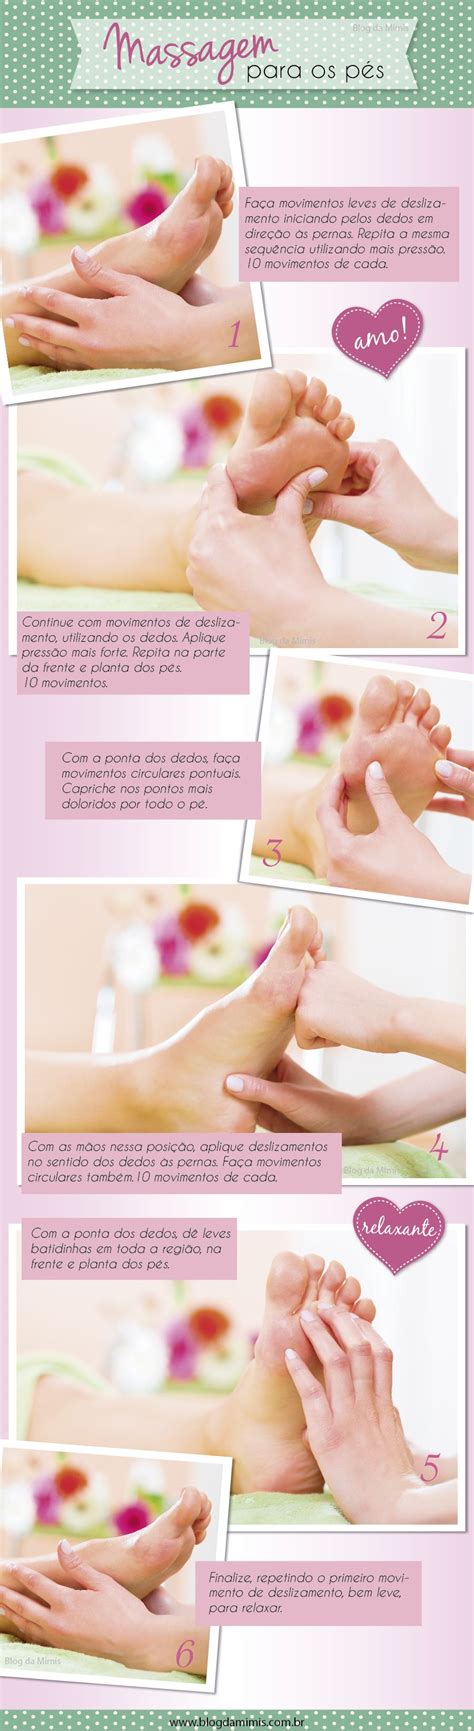 Massagem Pés Blog Da Mimis Michelle Franzoni 01 Massage Tips Massage Benefits Self Massage